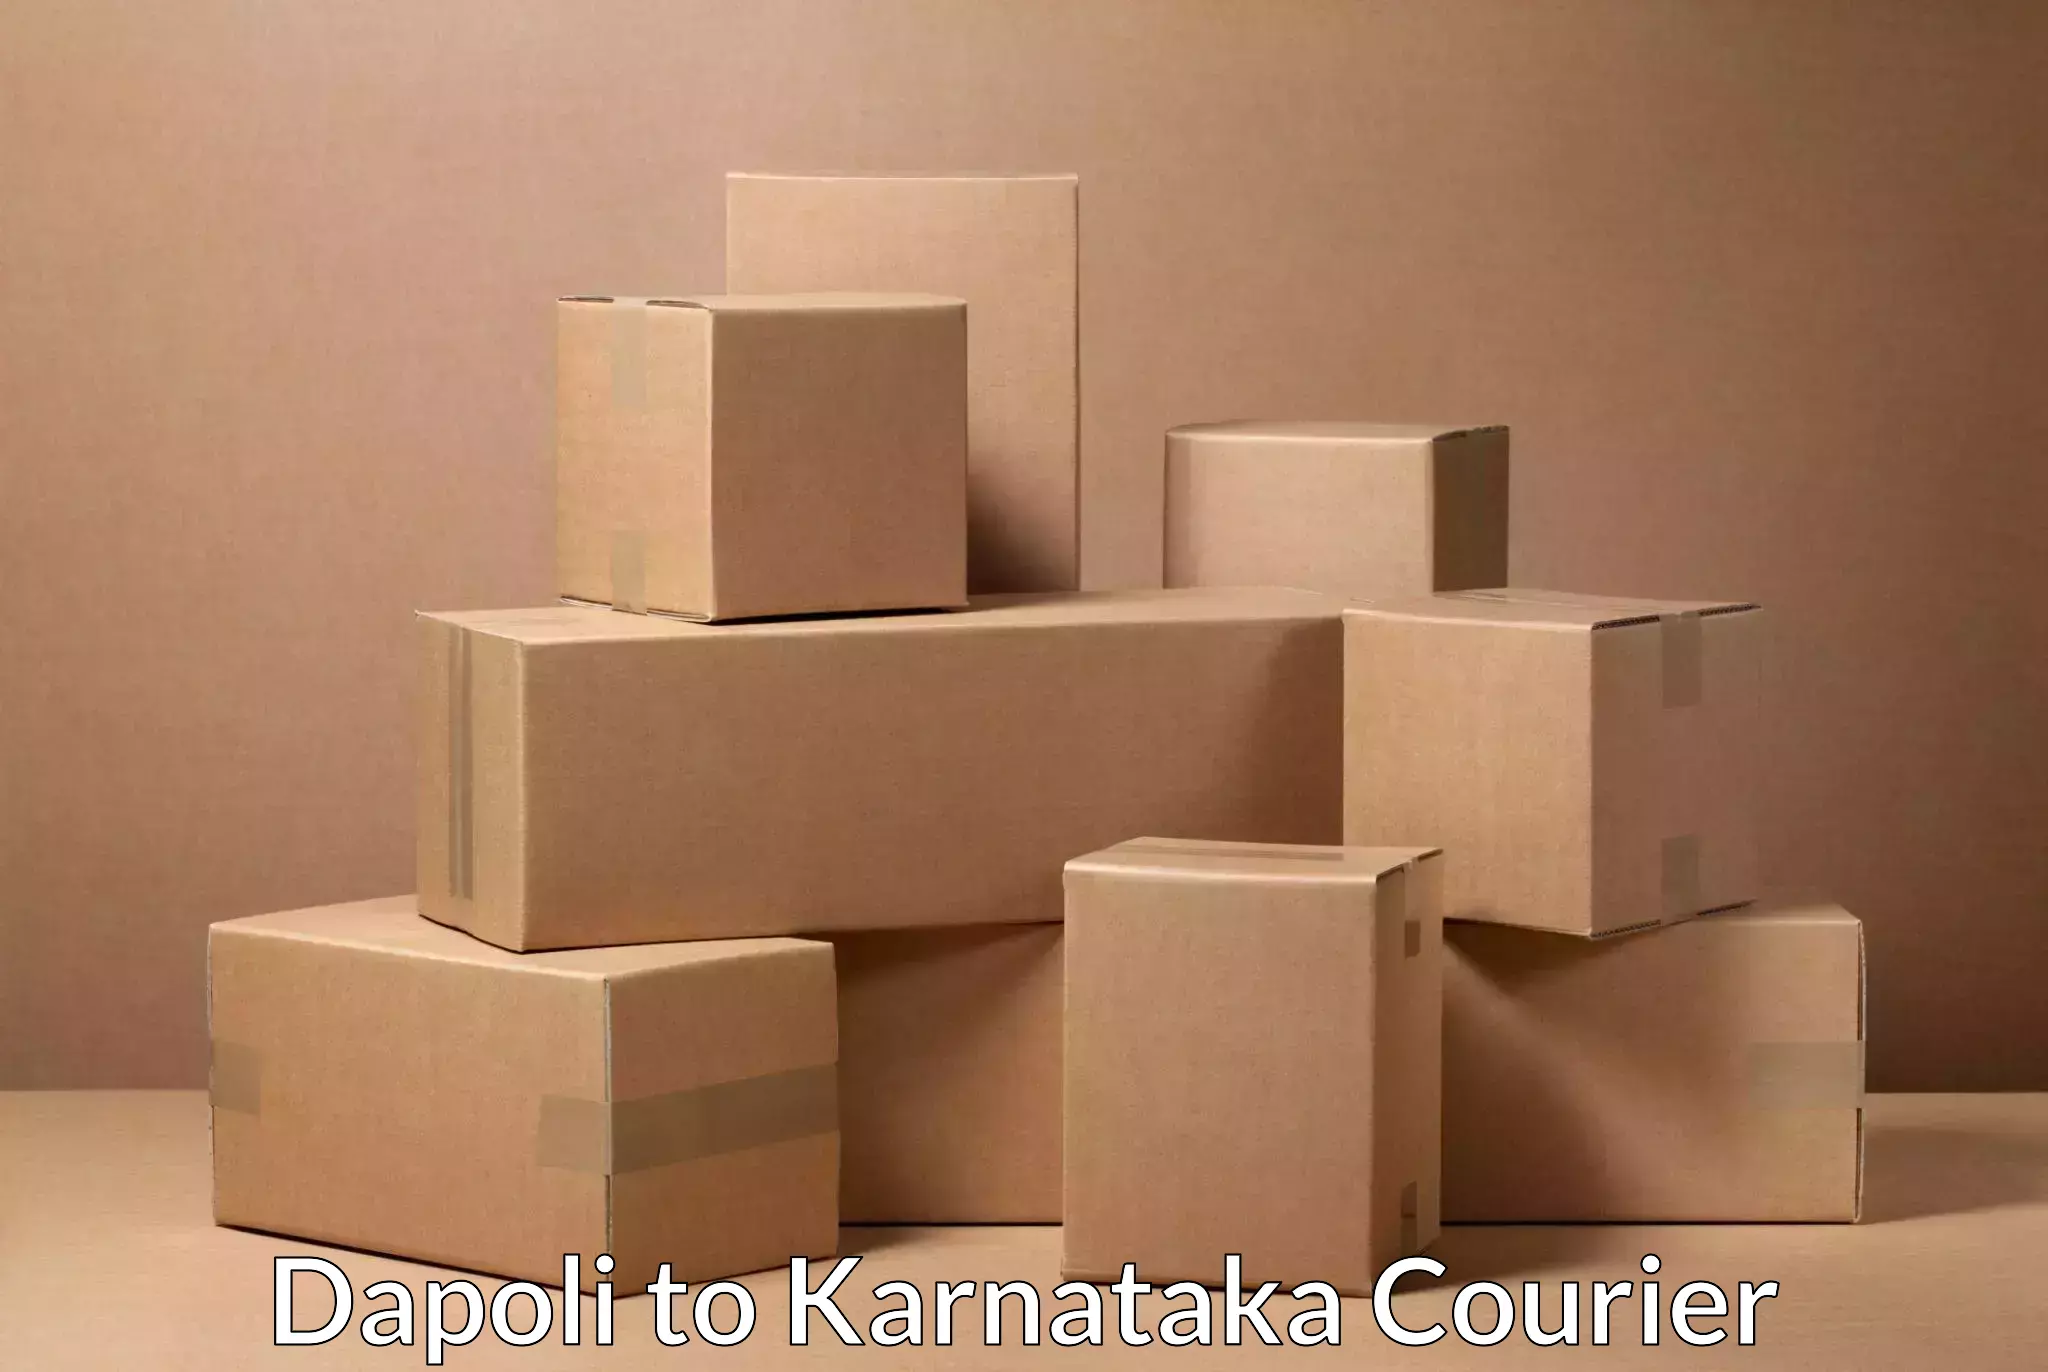 Delivery service partnership Dapoli to Karnataka